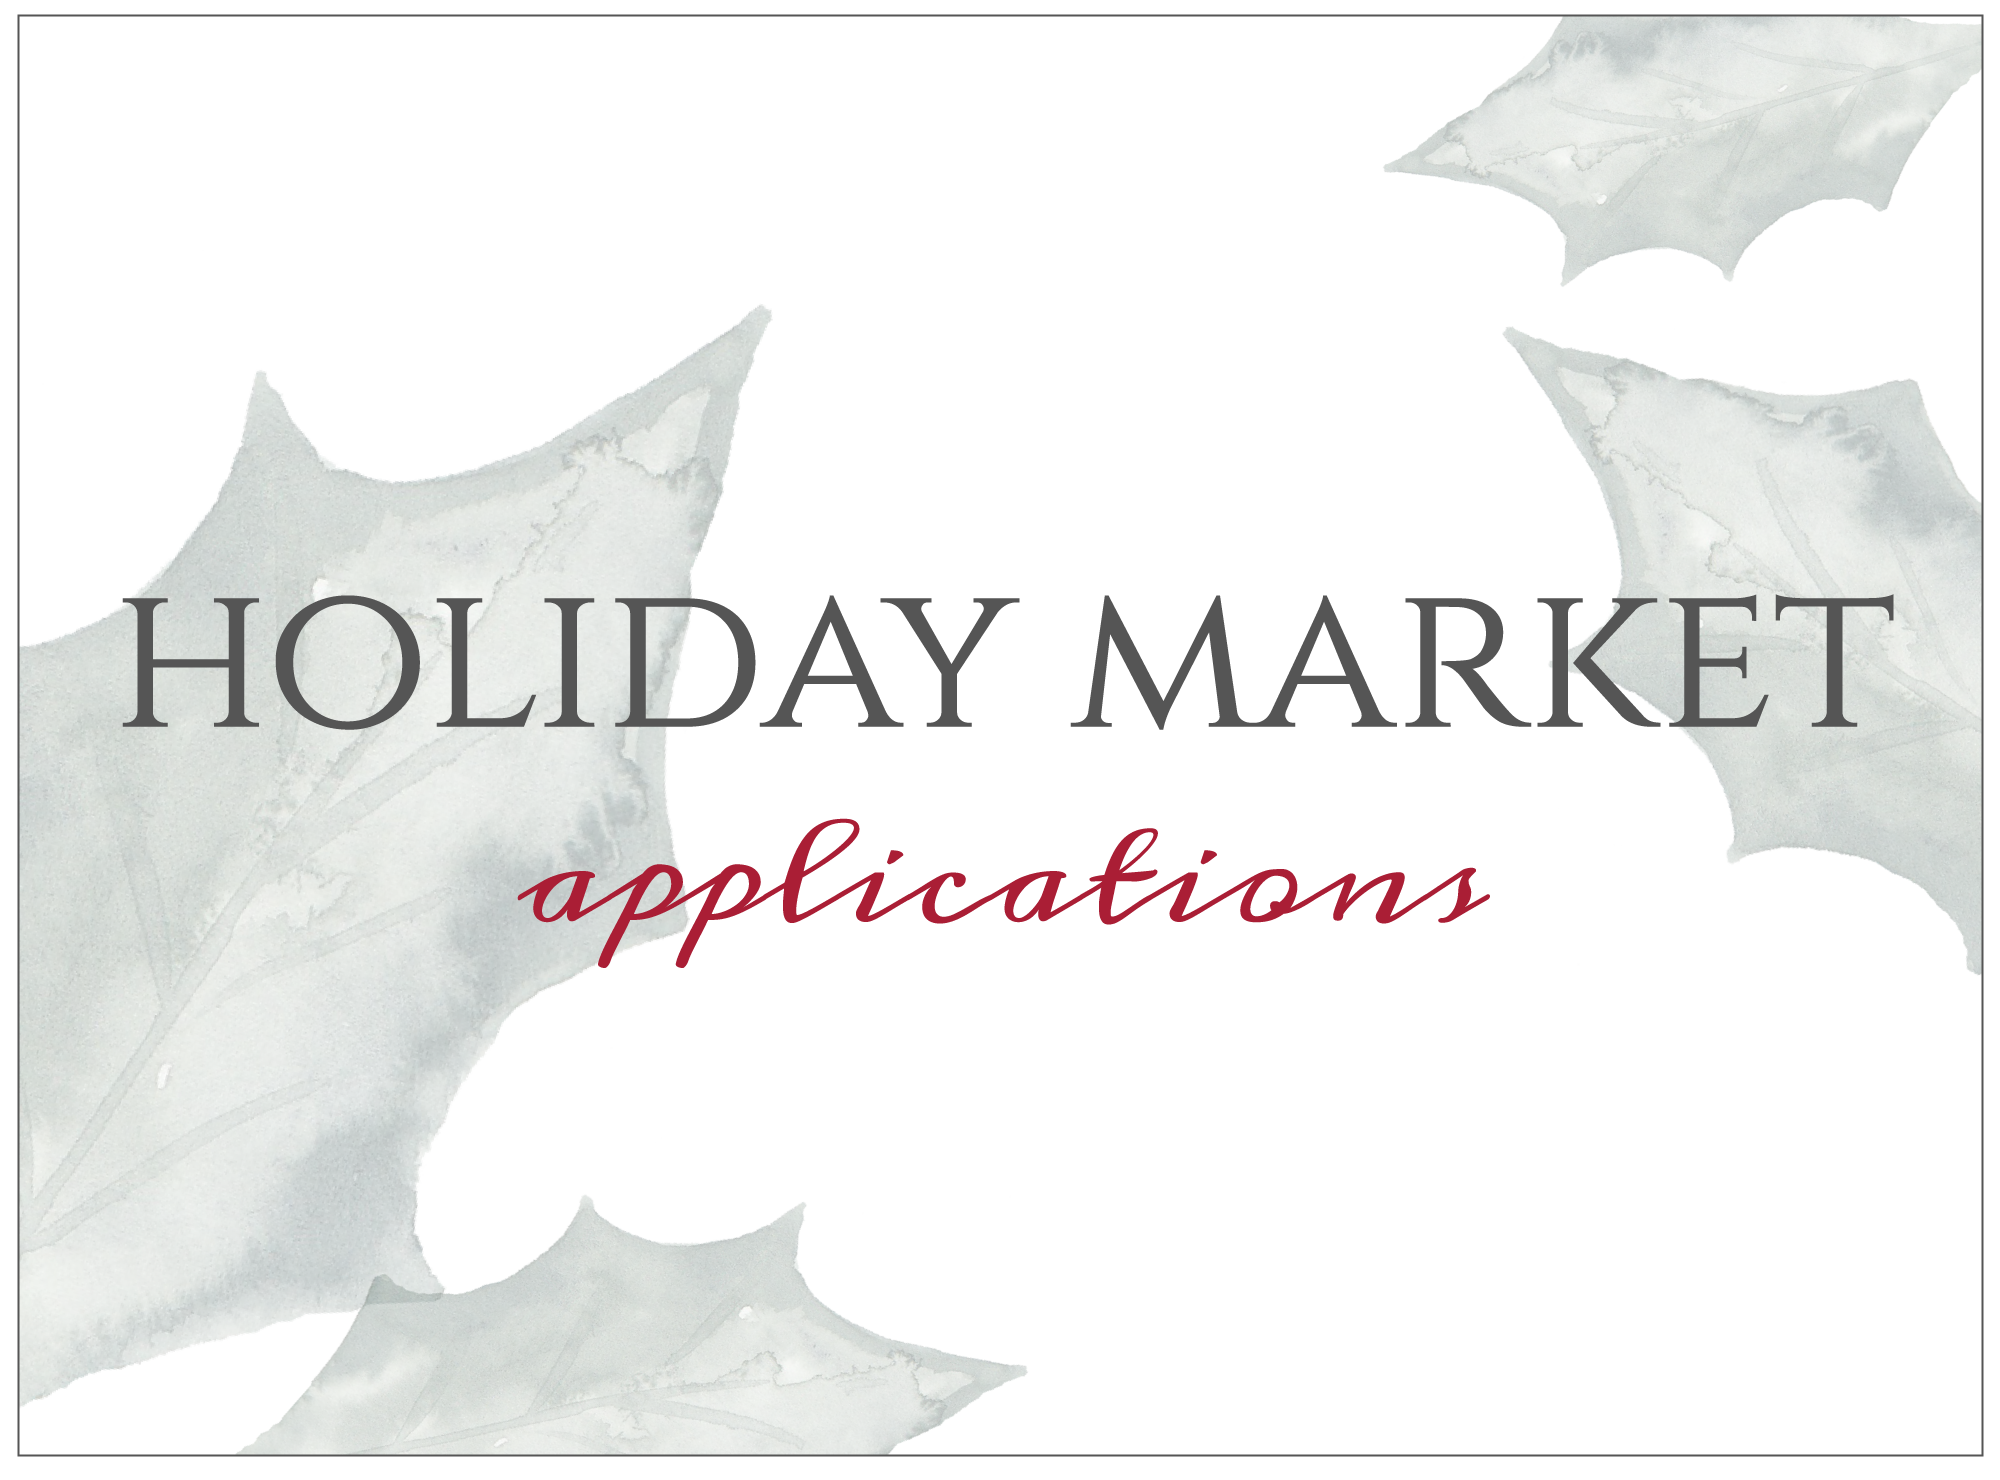 Holiday-Market-Applications.png